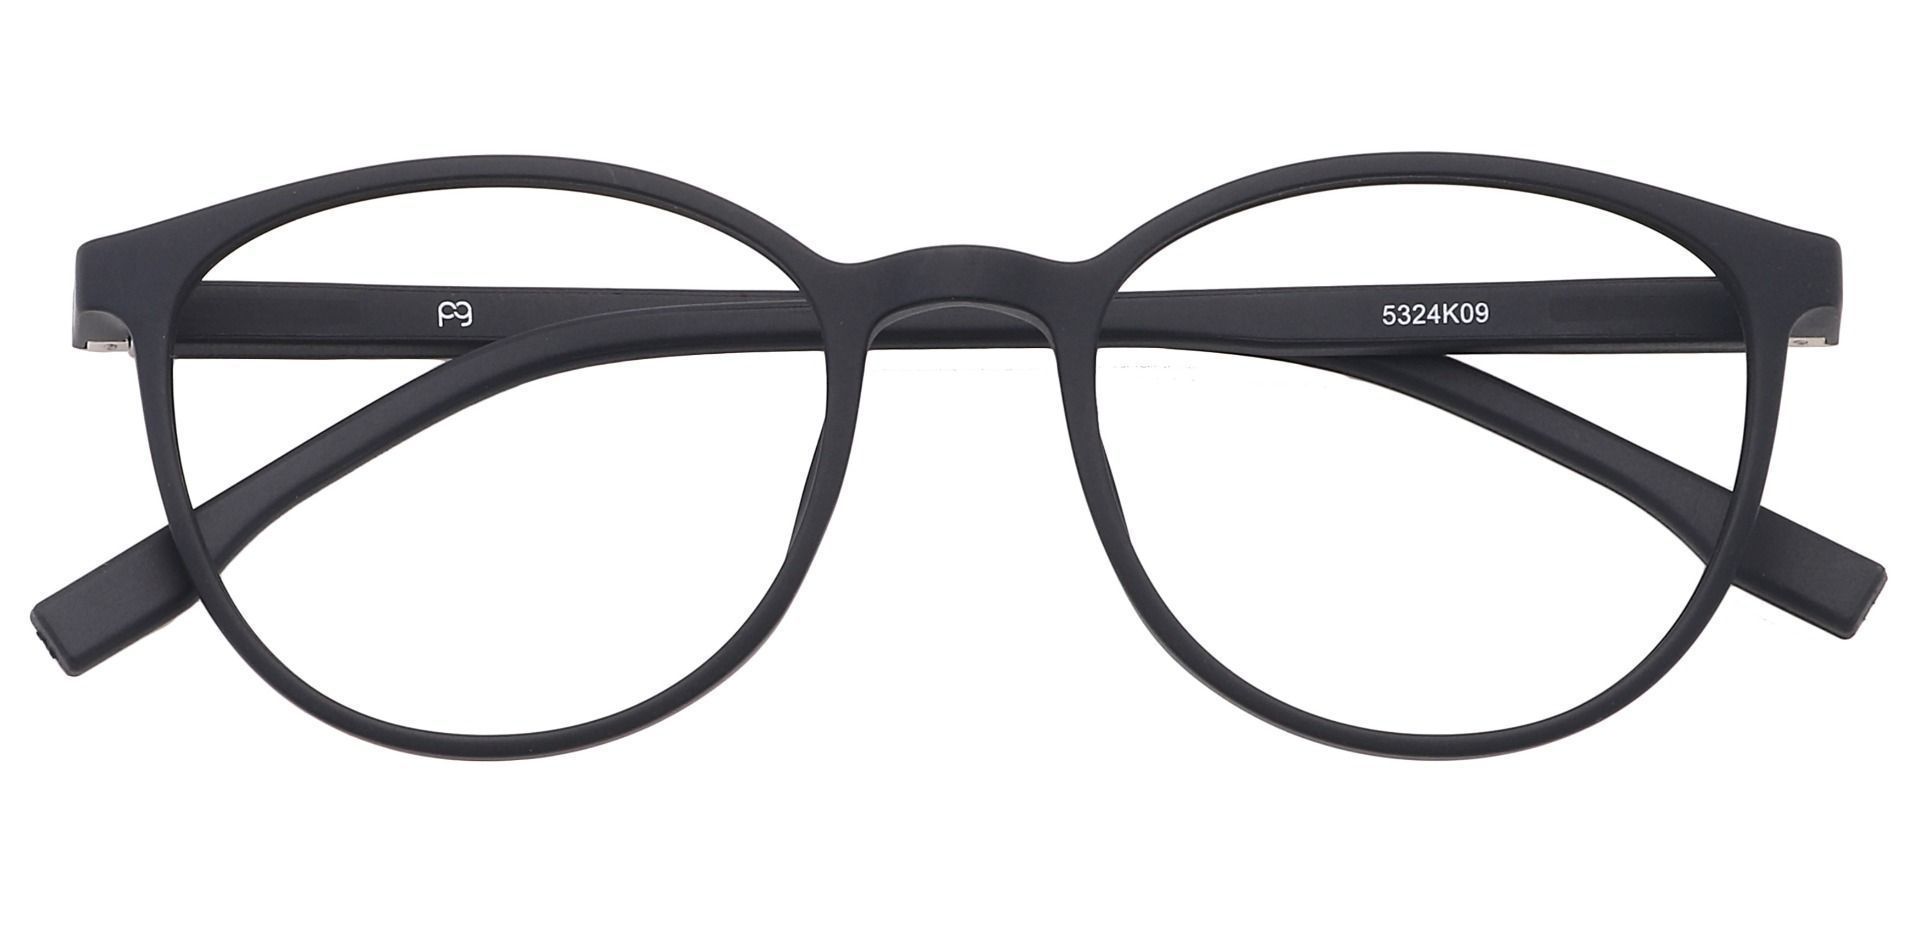 Bay Round Lined Bifocal Glasses - Matte Black